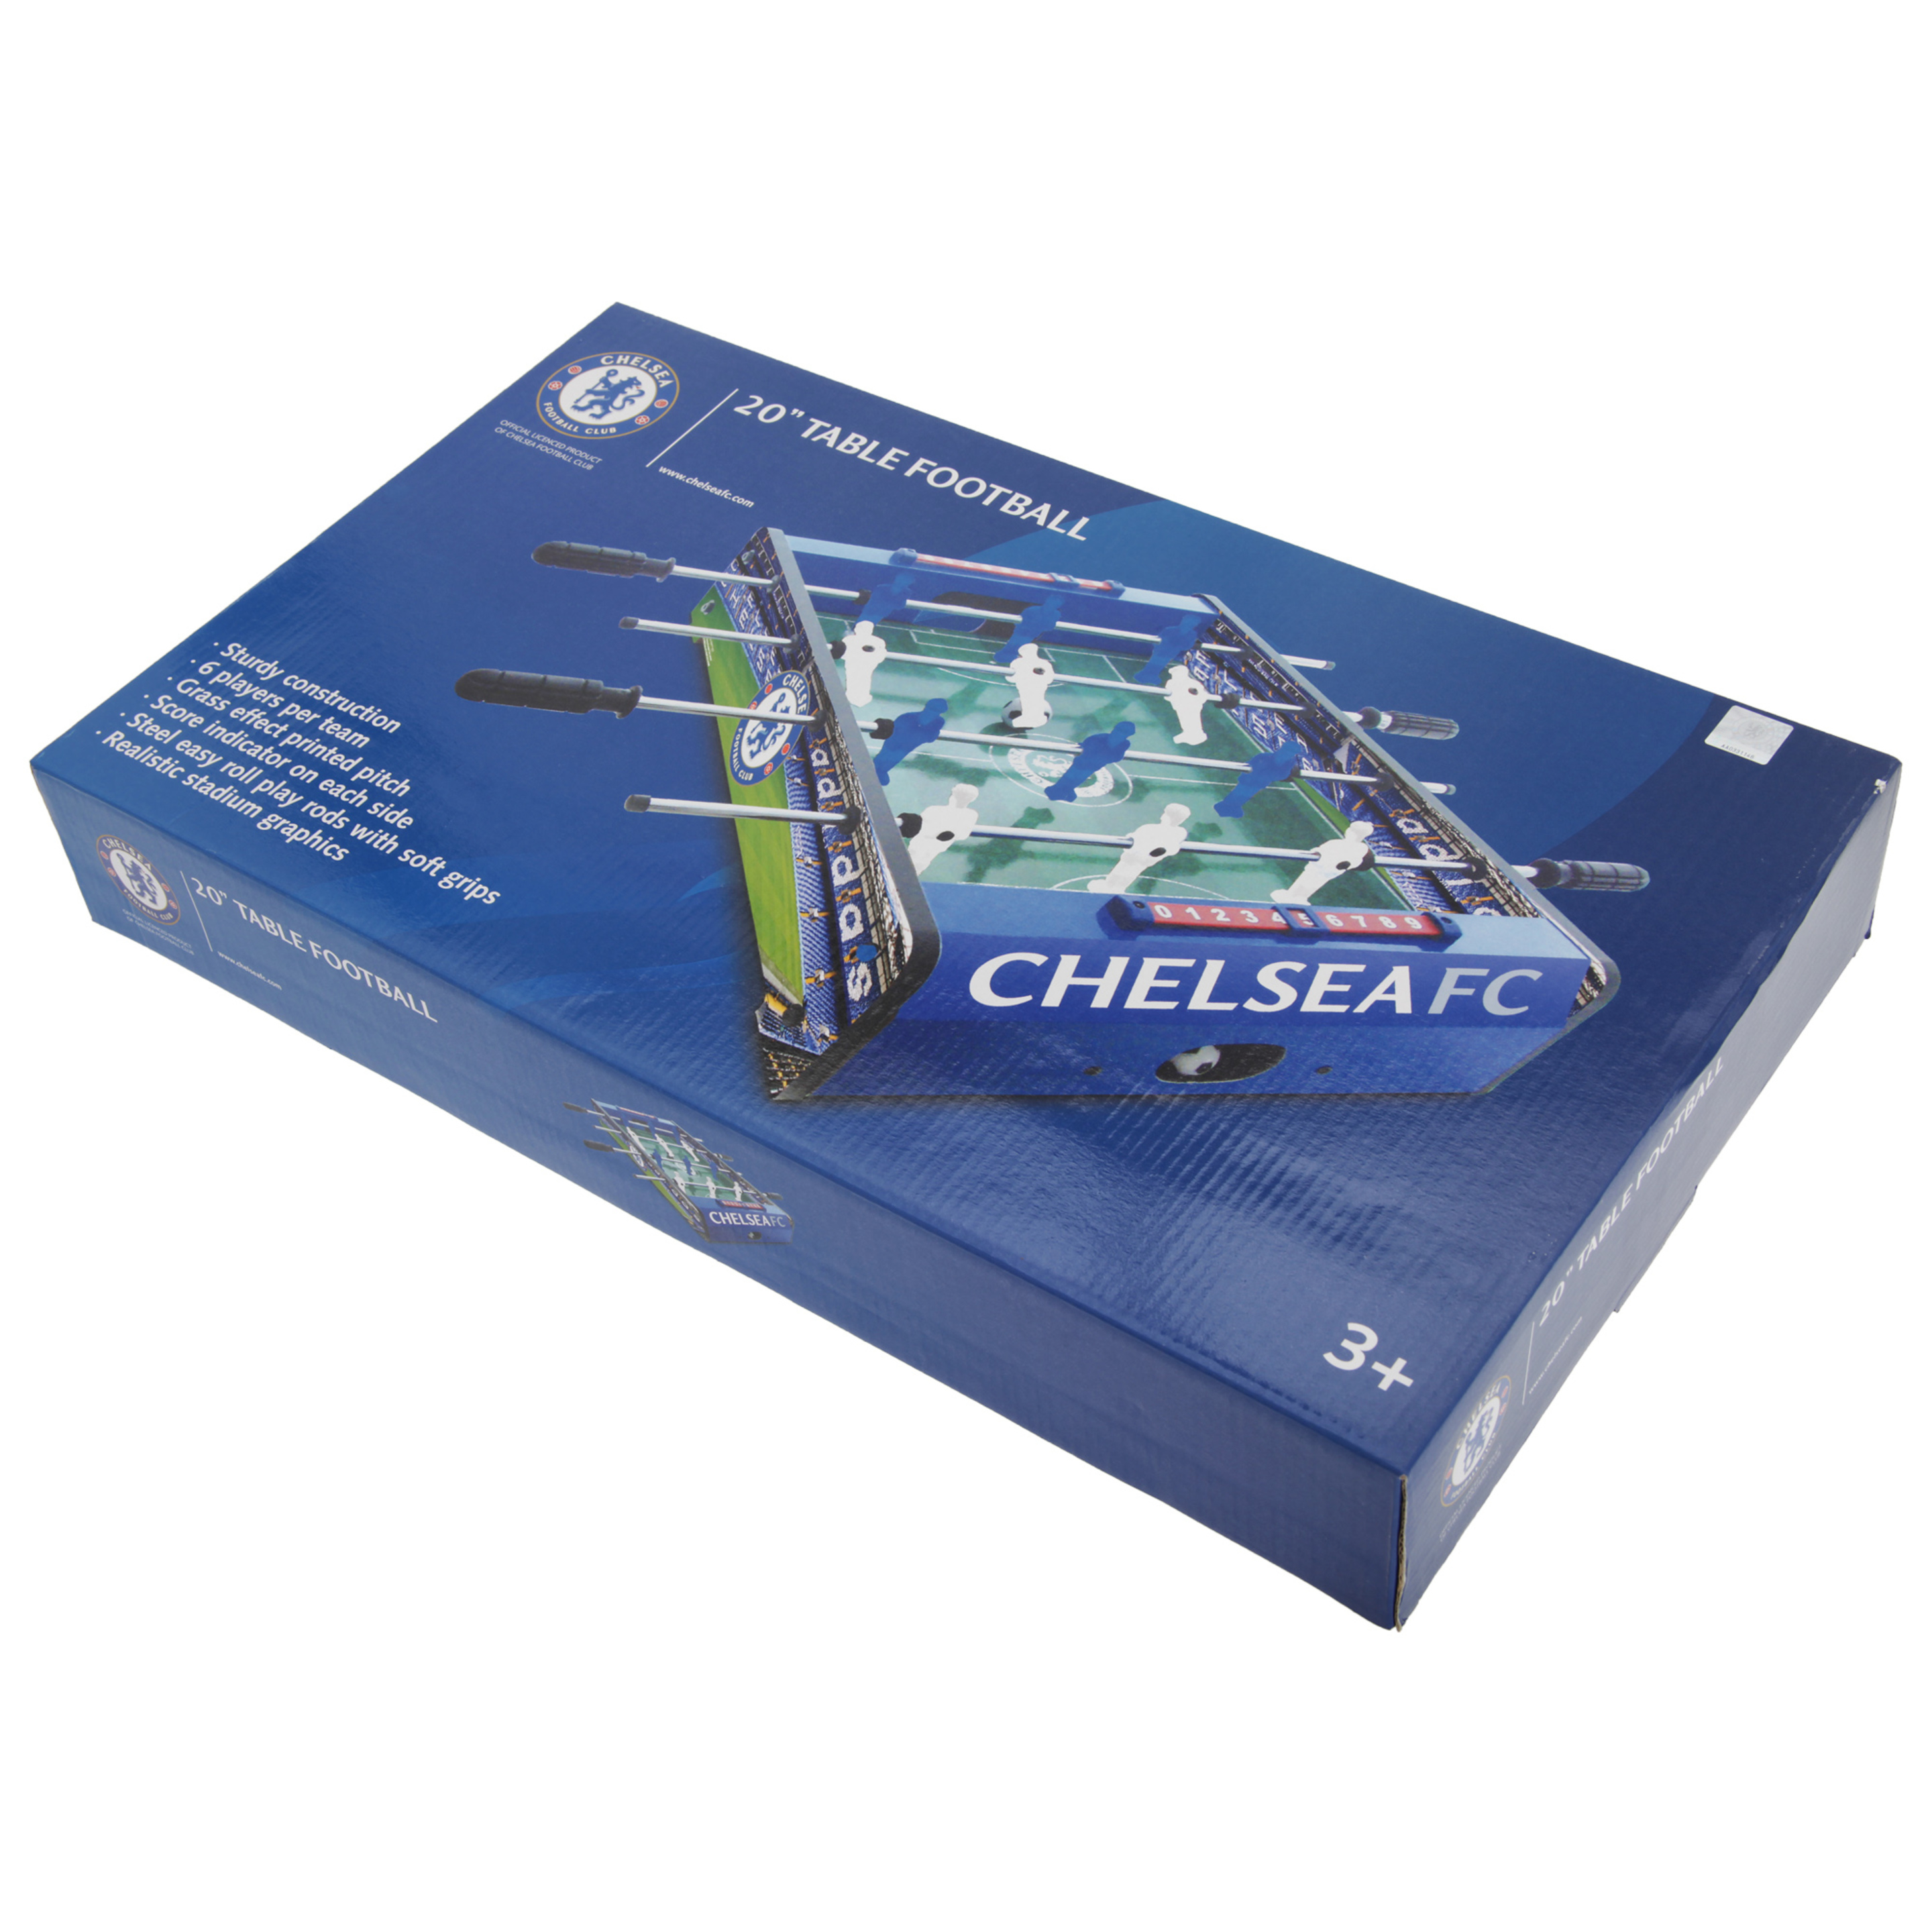 Futbolín De Mesa Oficial Del Club Chelsea Fc (Azul)